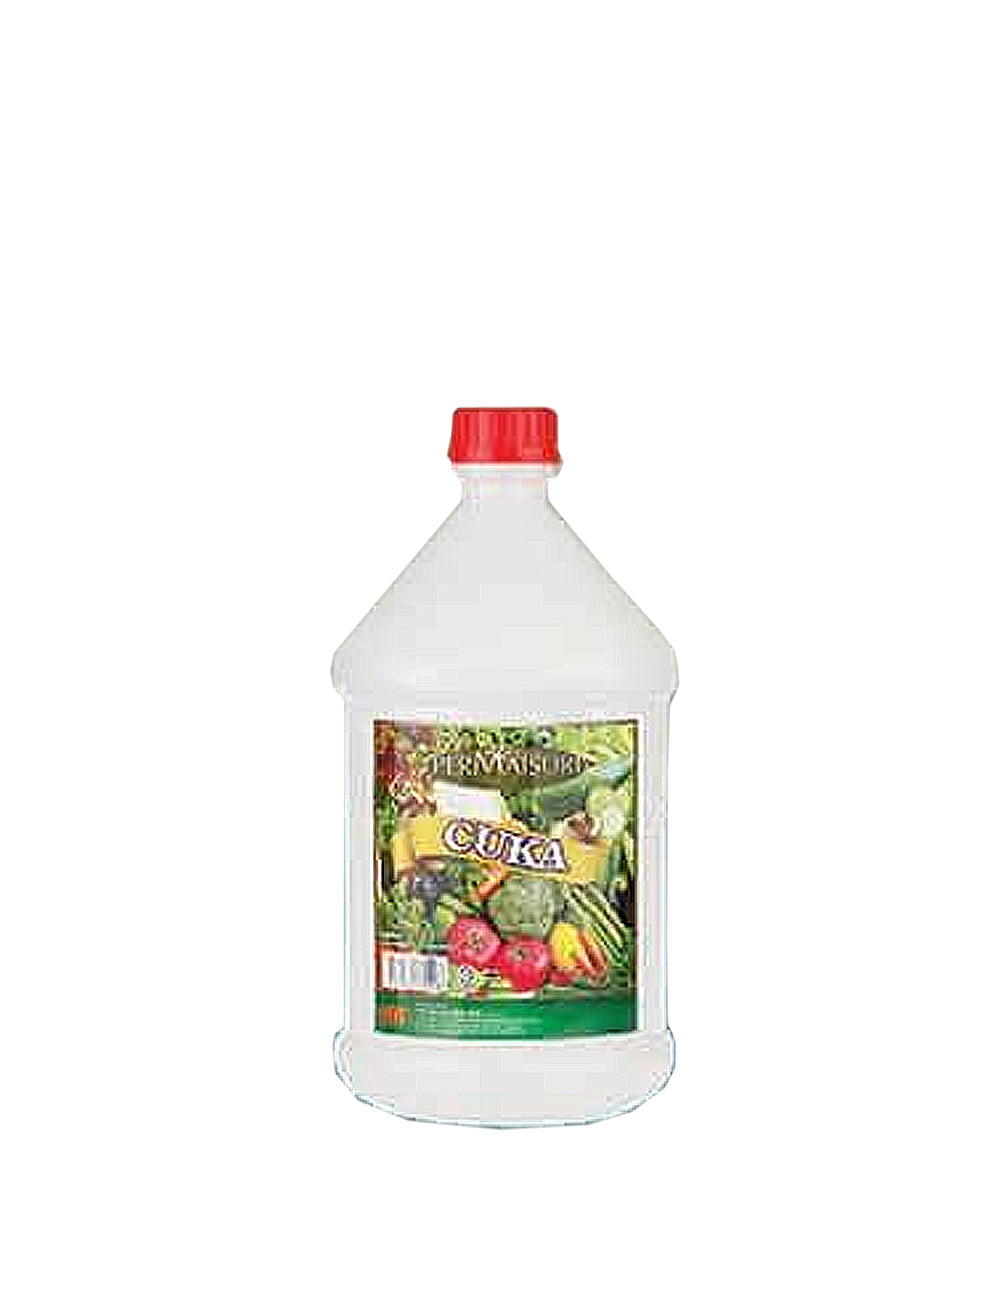 Permaisuri Artificial Vinegar 福泰興白醋